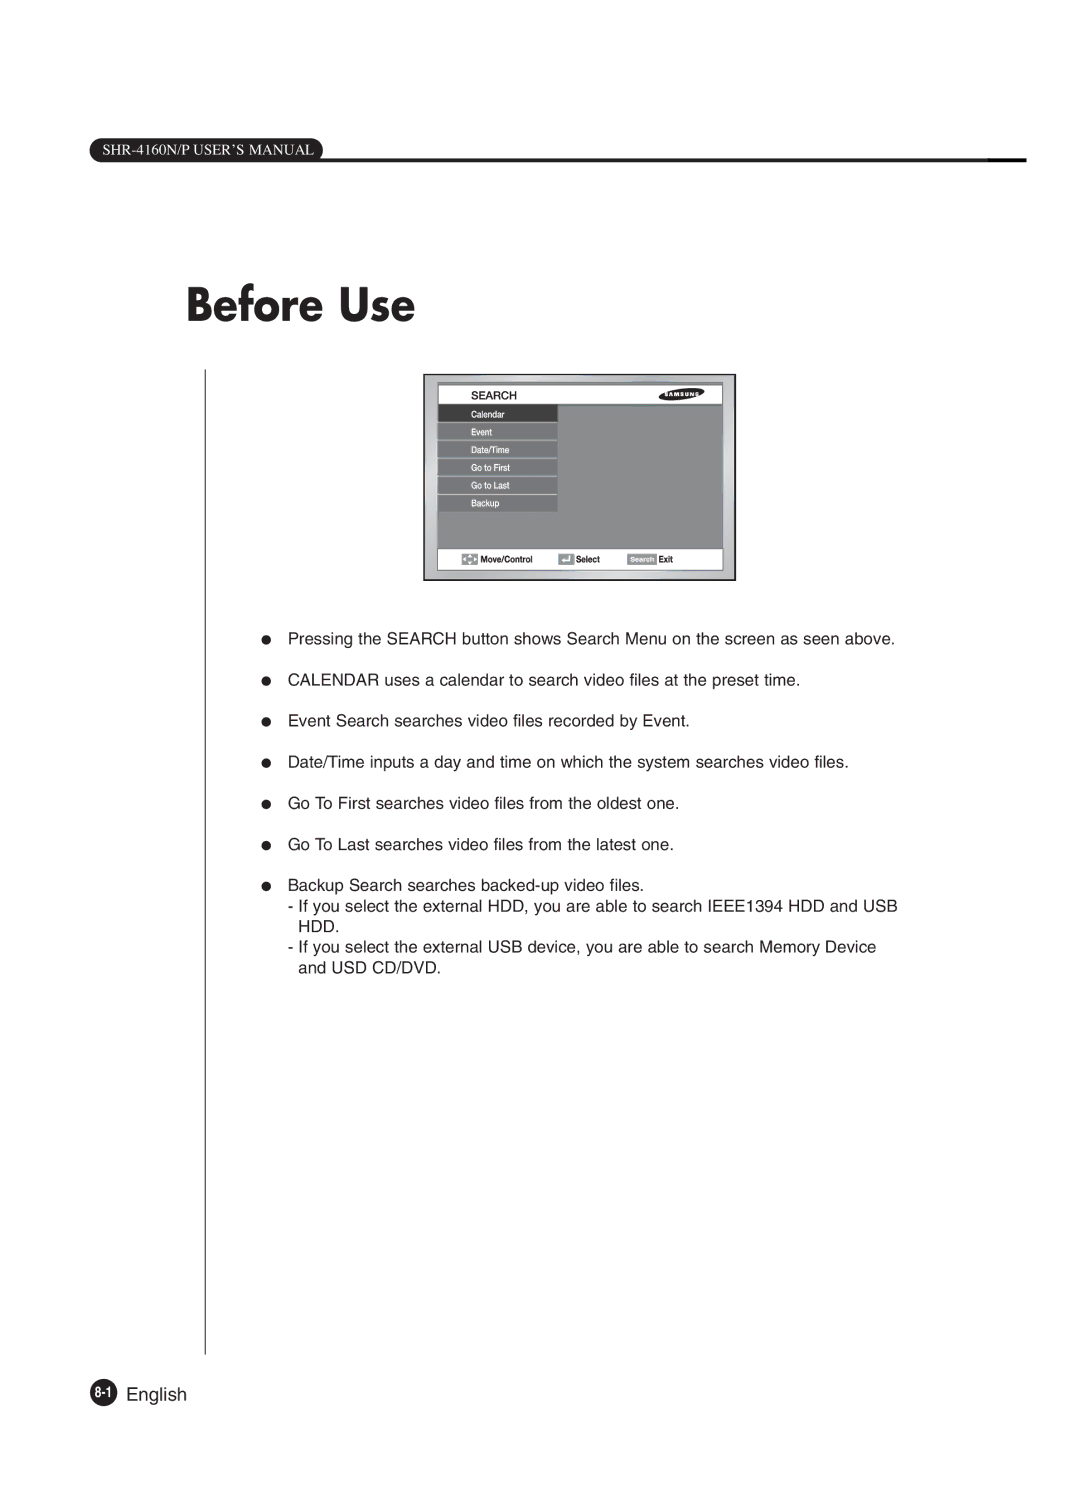 Samsung SHR-4160P manual Before Use, 1English 